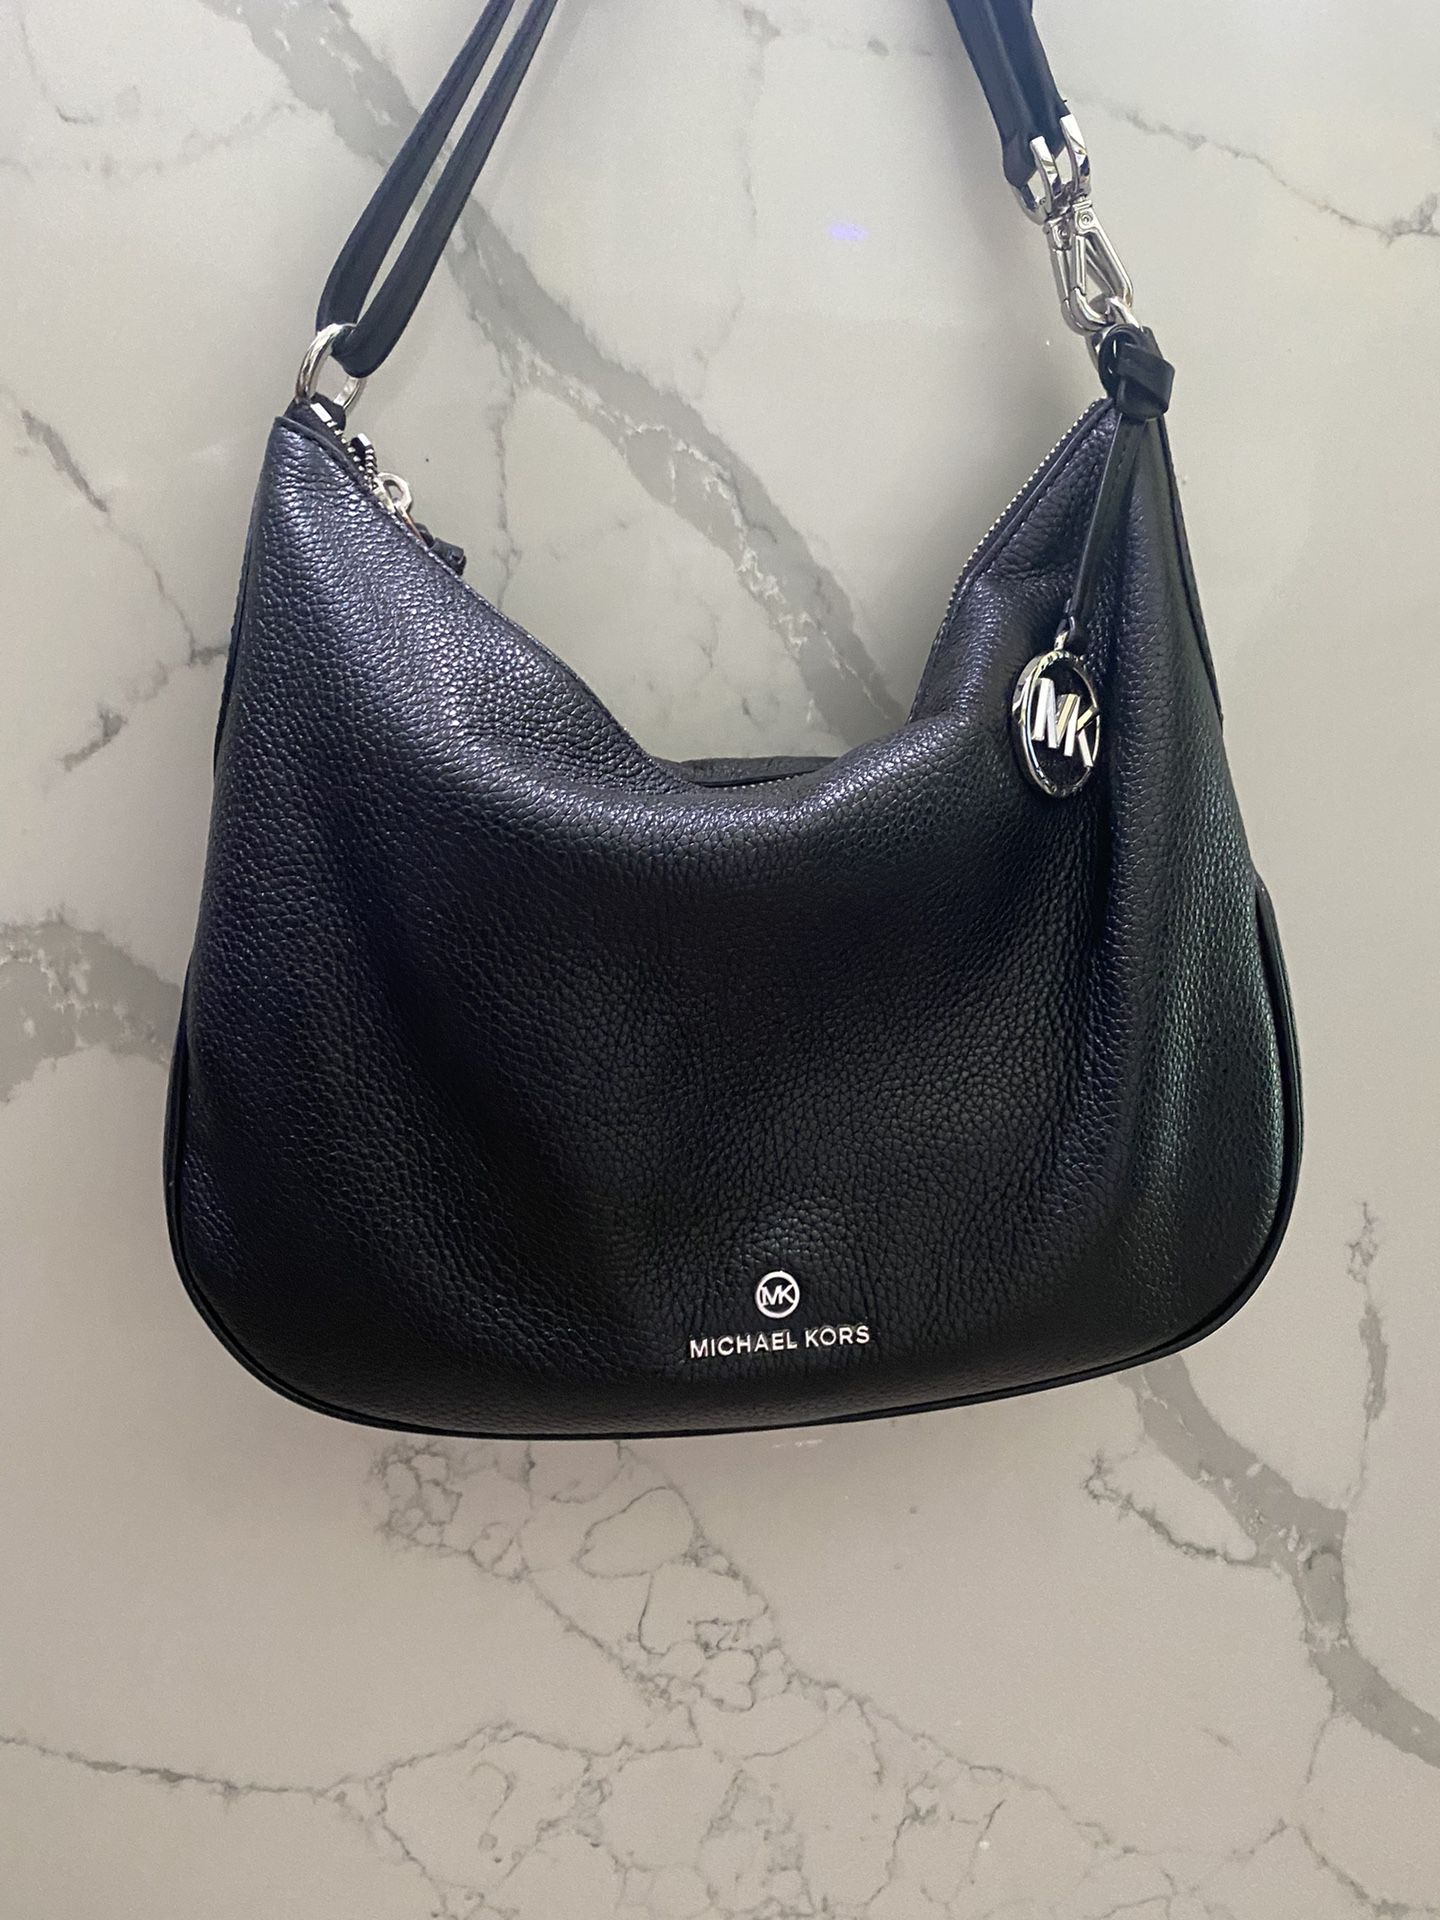 Michael Kors Black Leather Purse Handbag